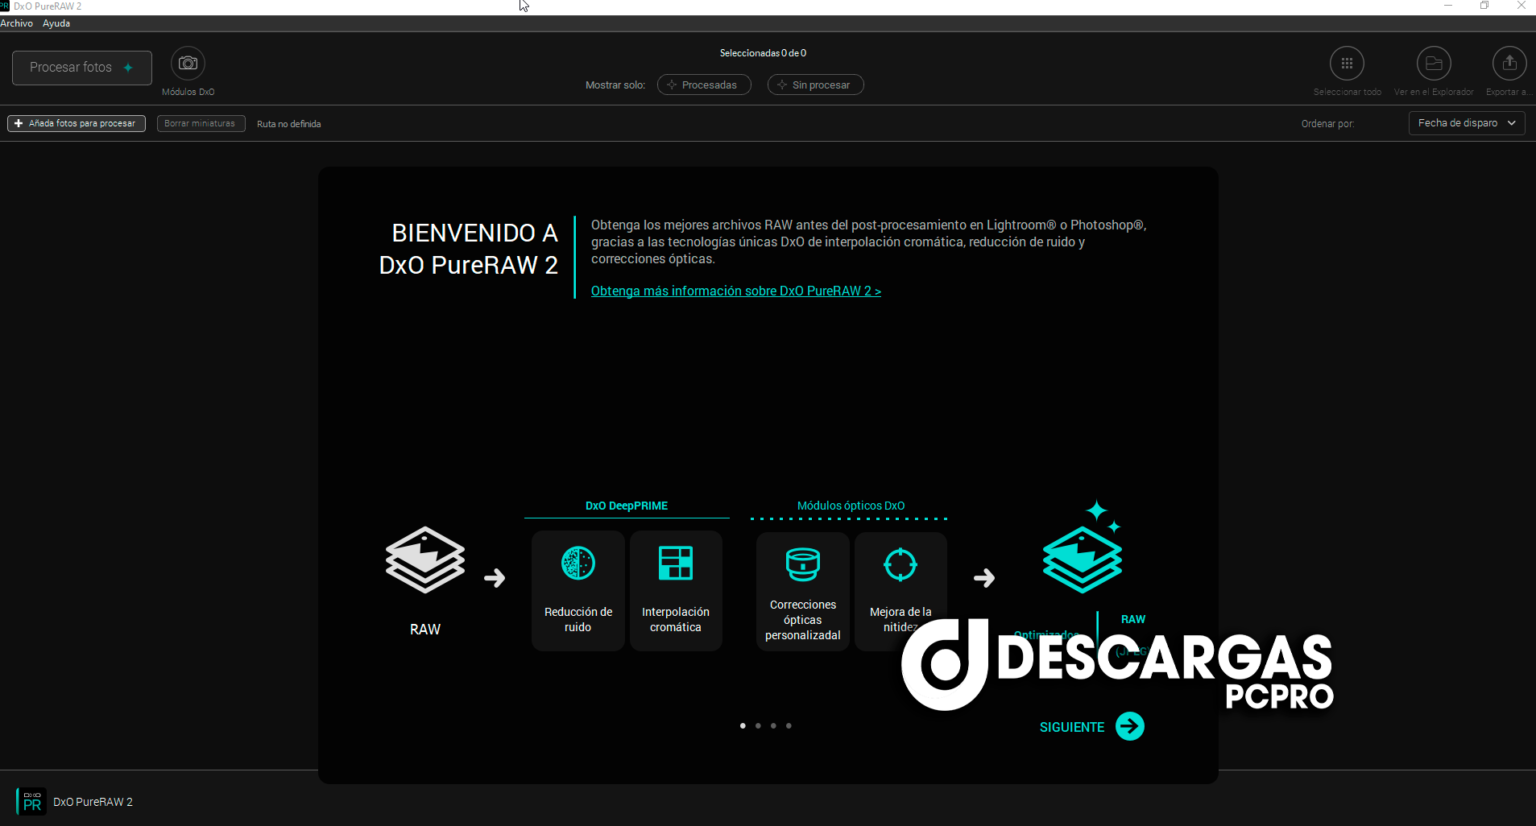 download the new version DxO PureRAW 3.3.1.14